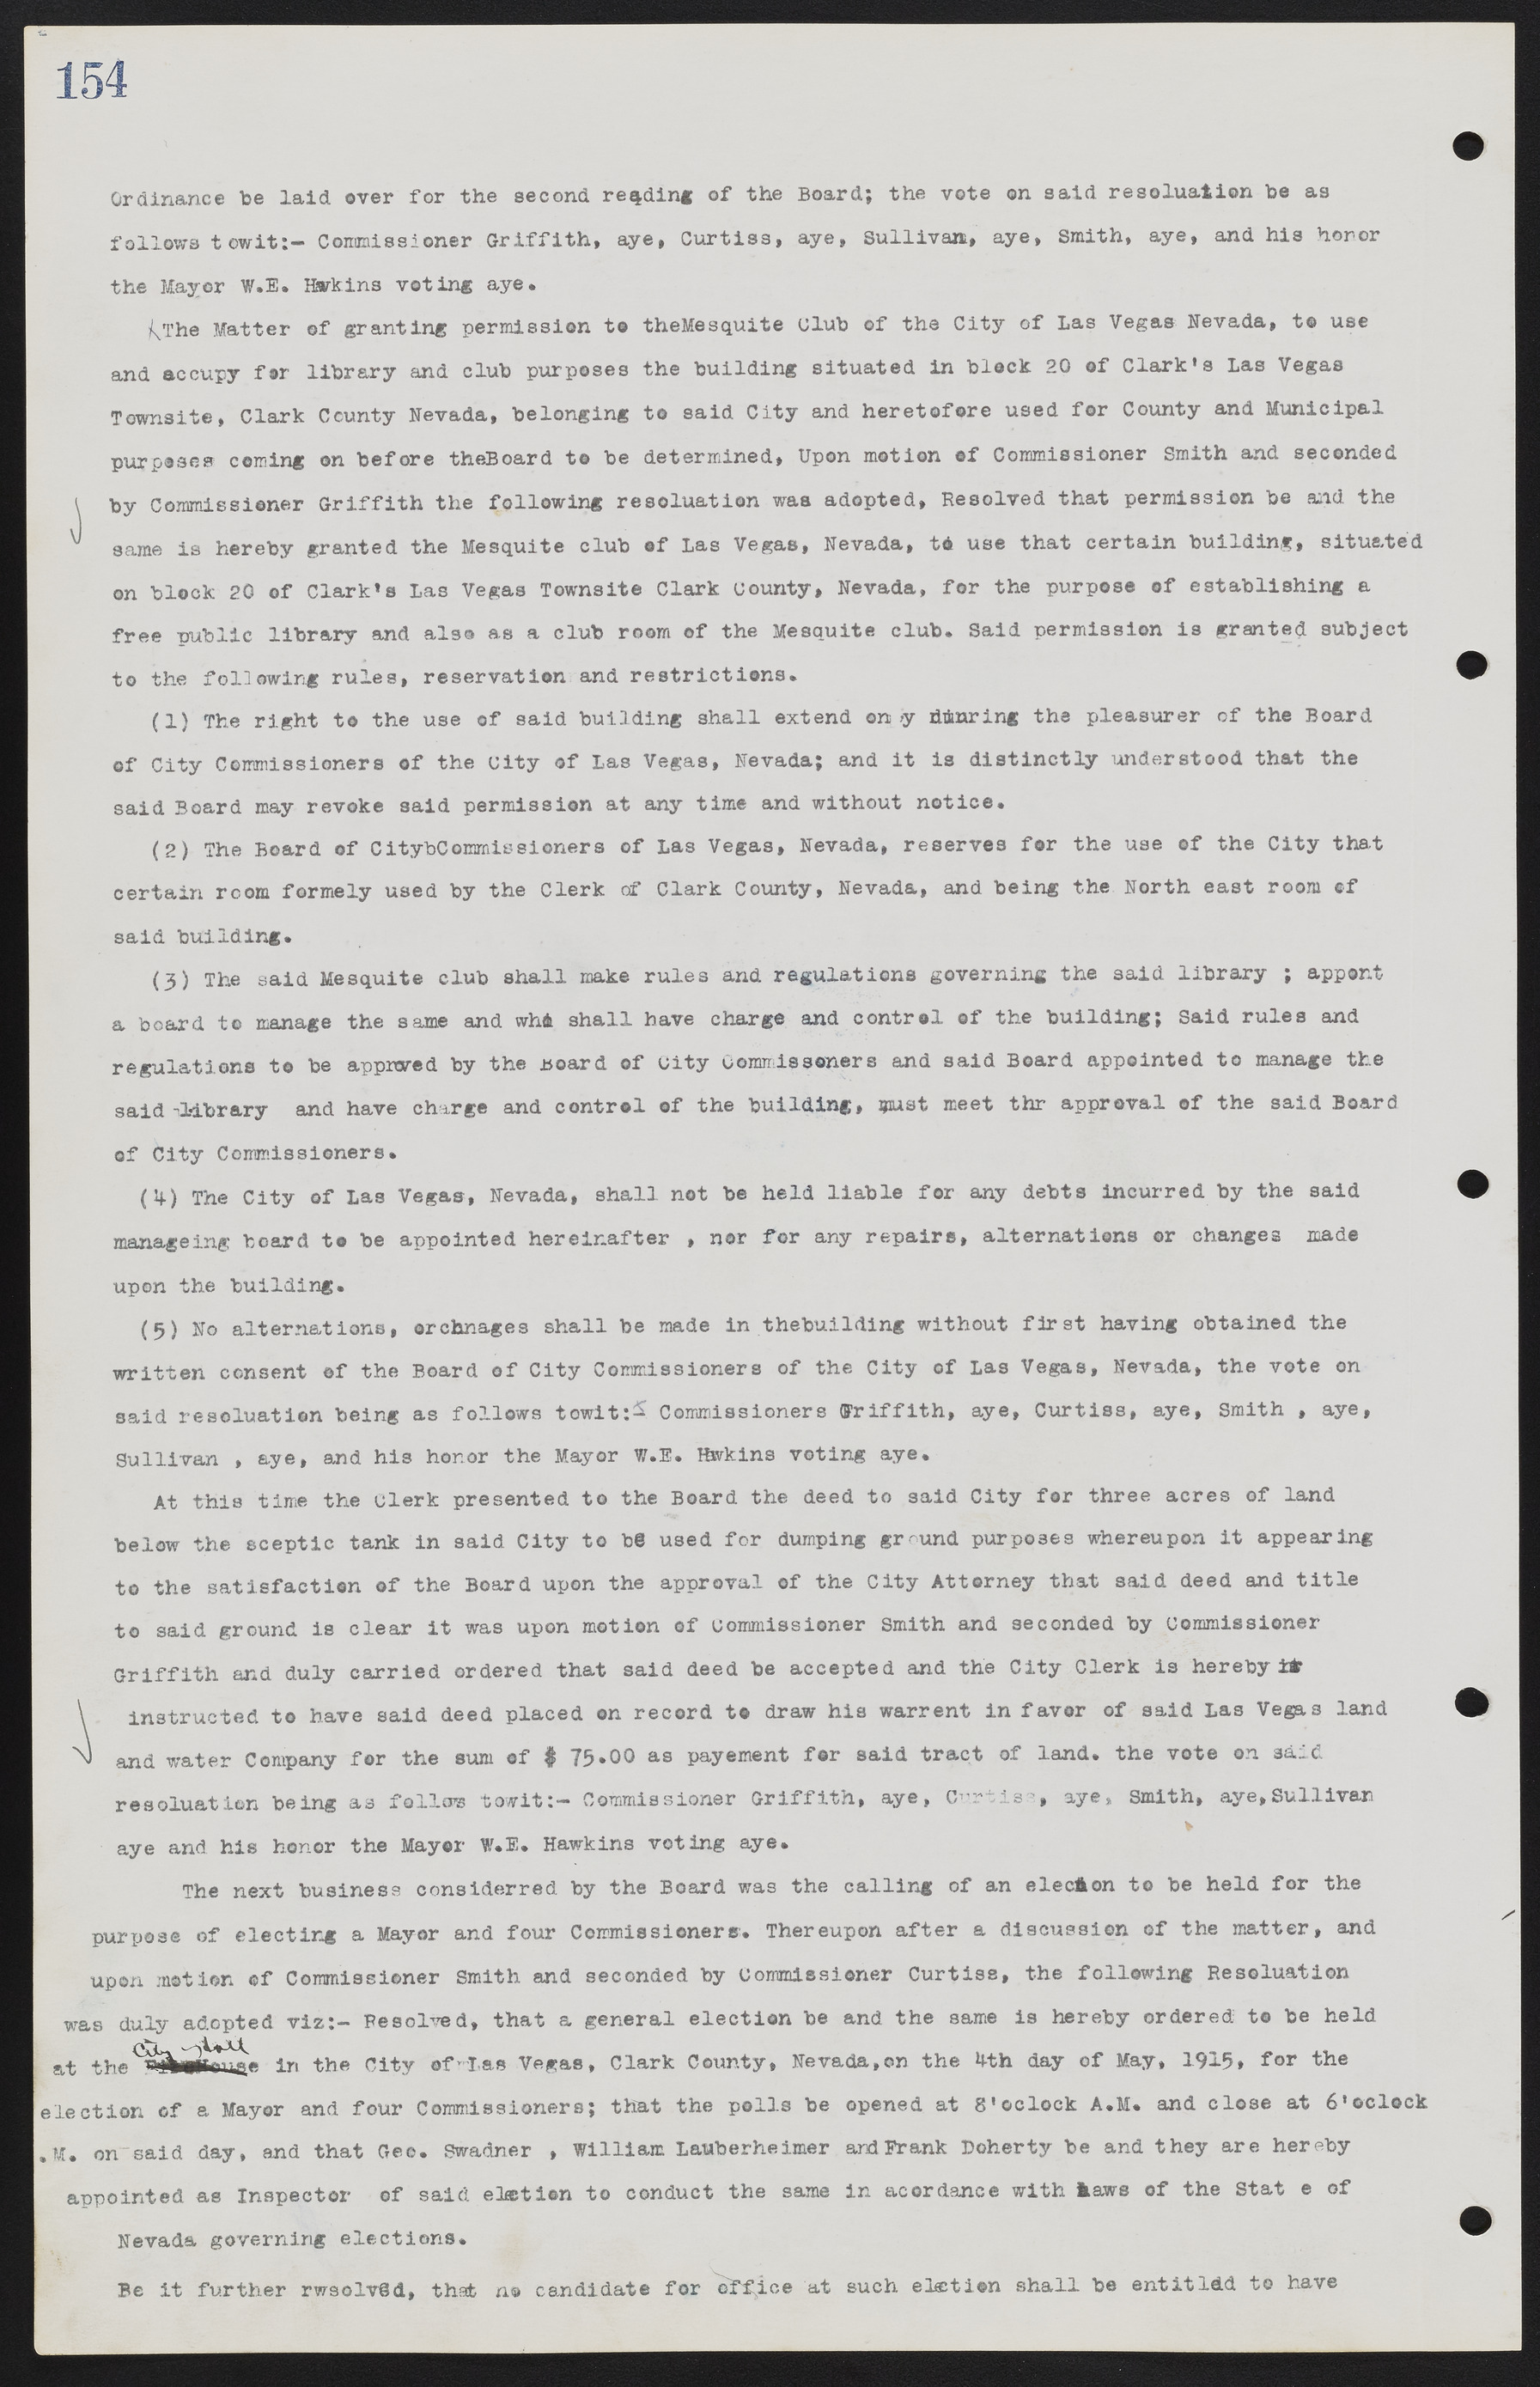 Las Vegas City Commission Minutes, June 22, 1911 to February 7, 1922, lvc000001-170